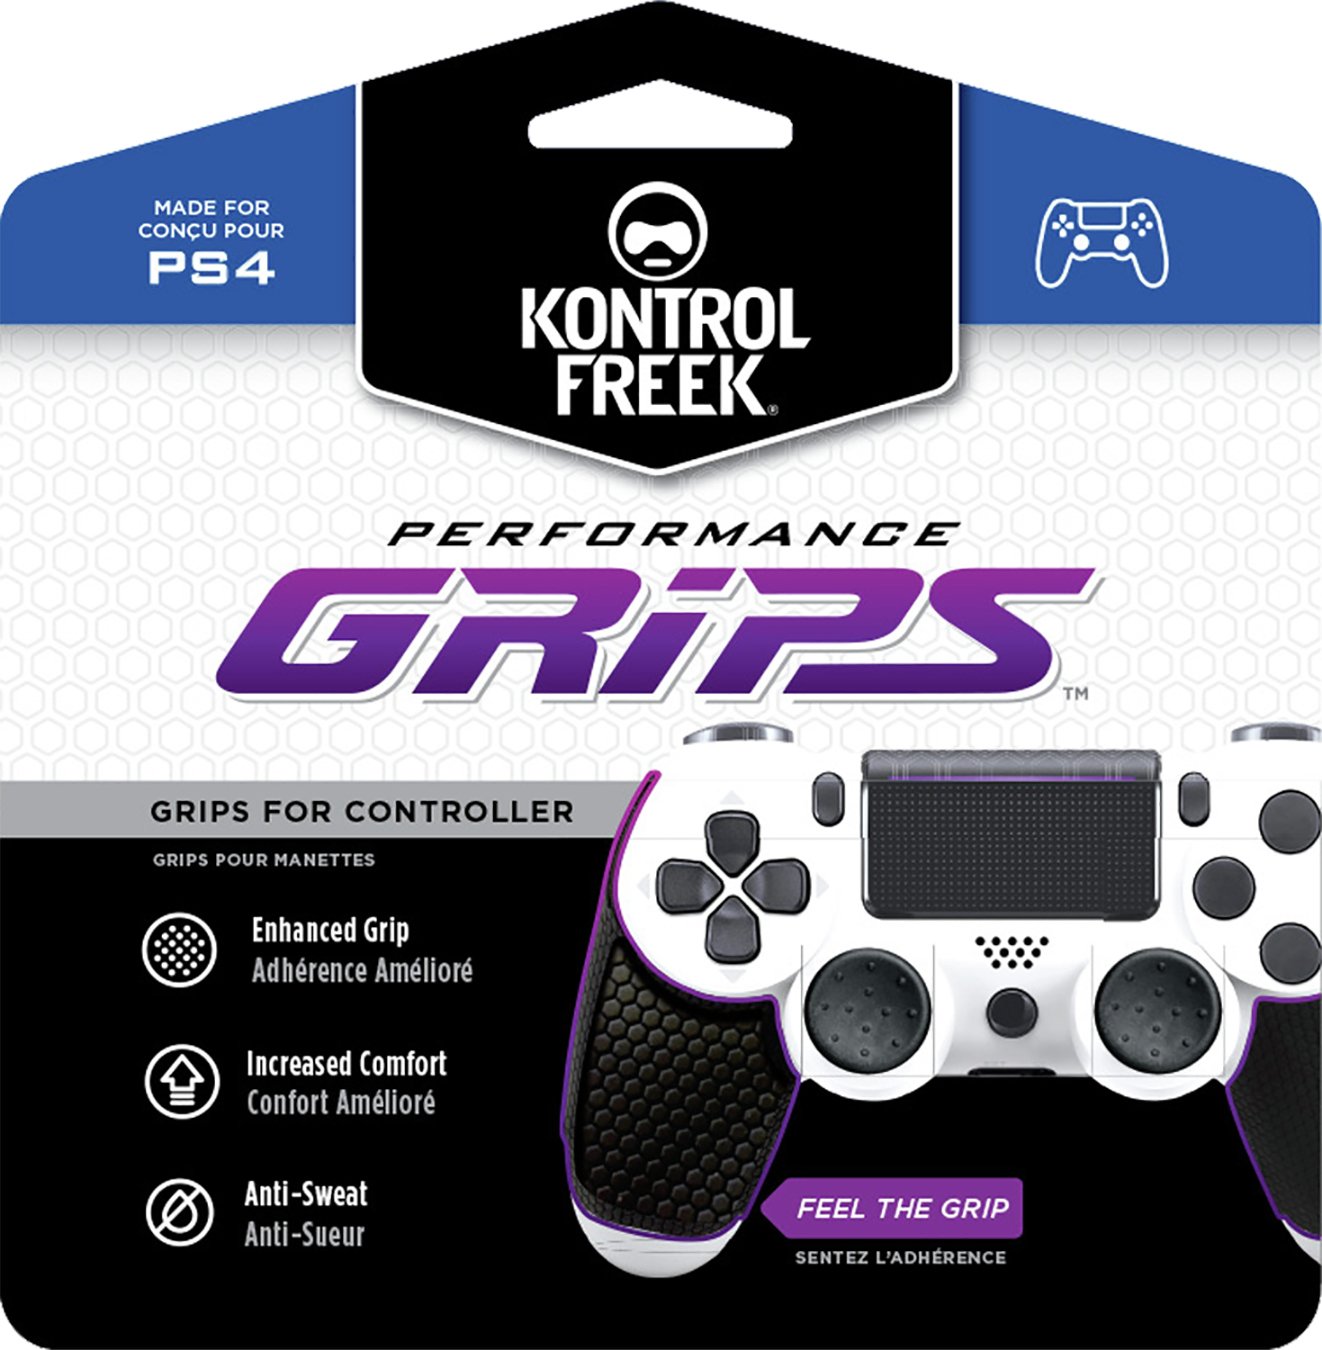 KontrolFreek PS4 Performance Grips Review